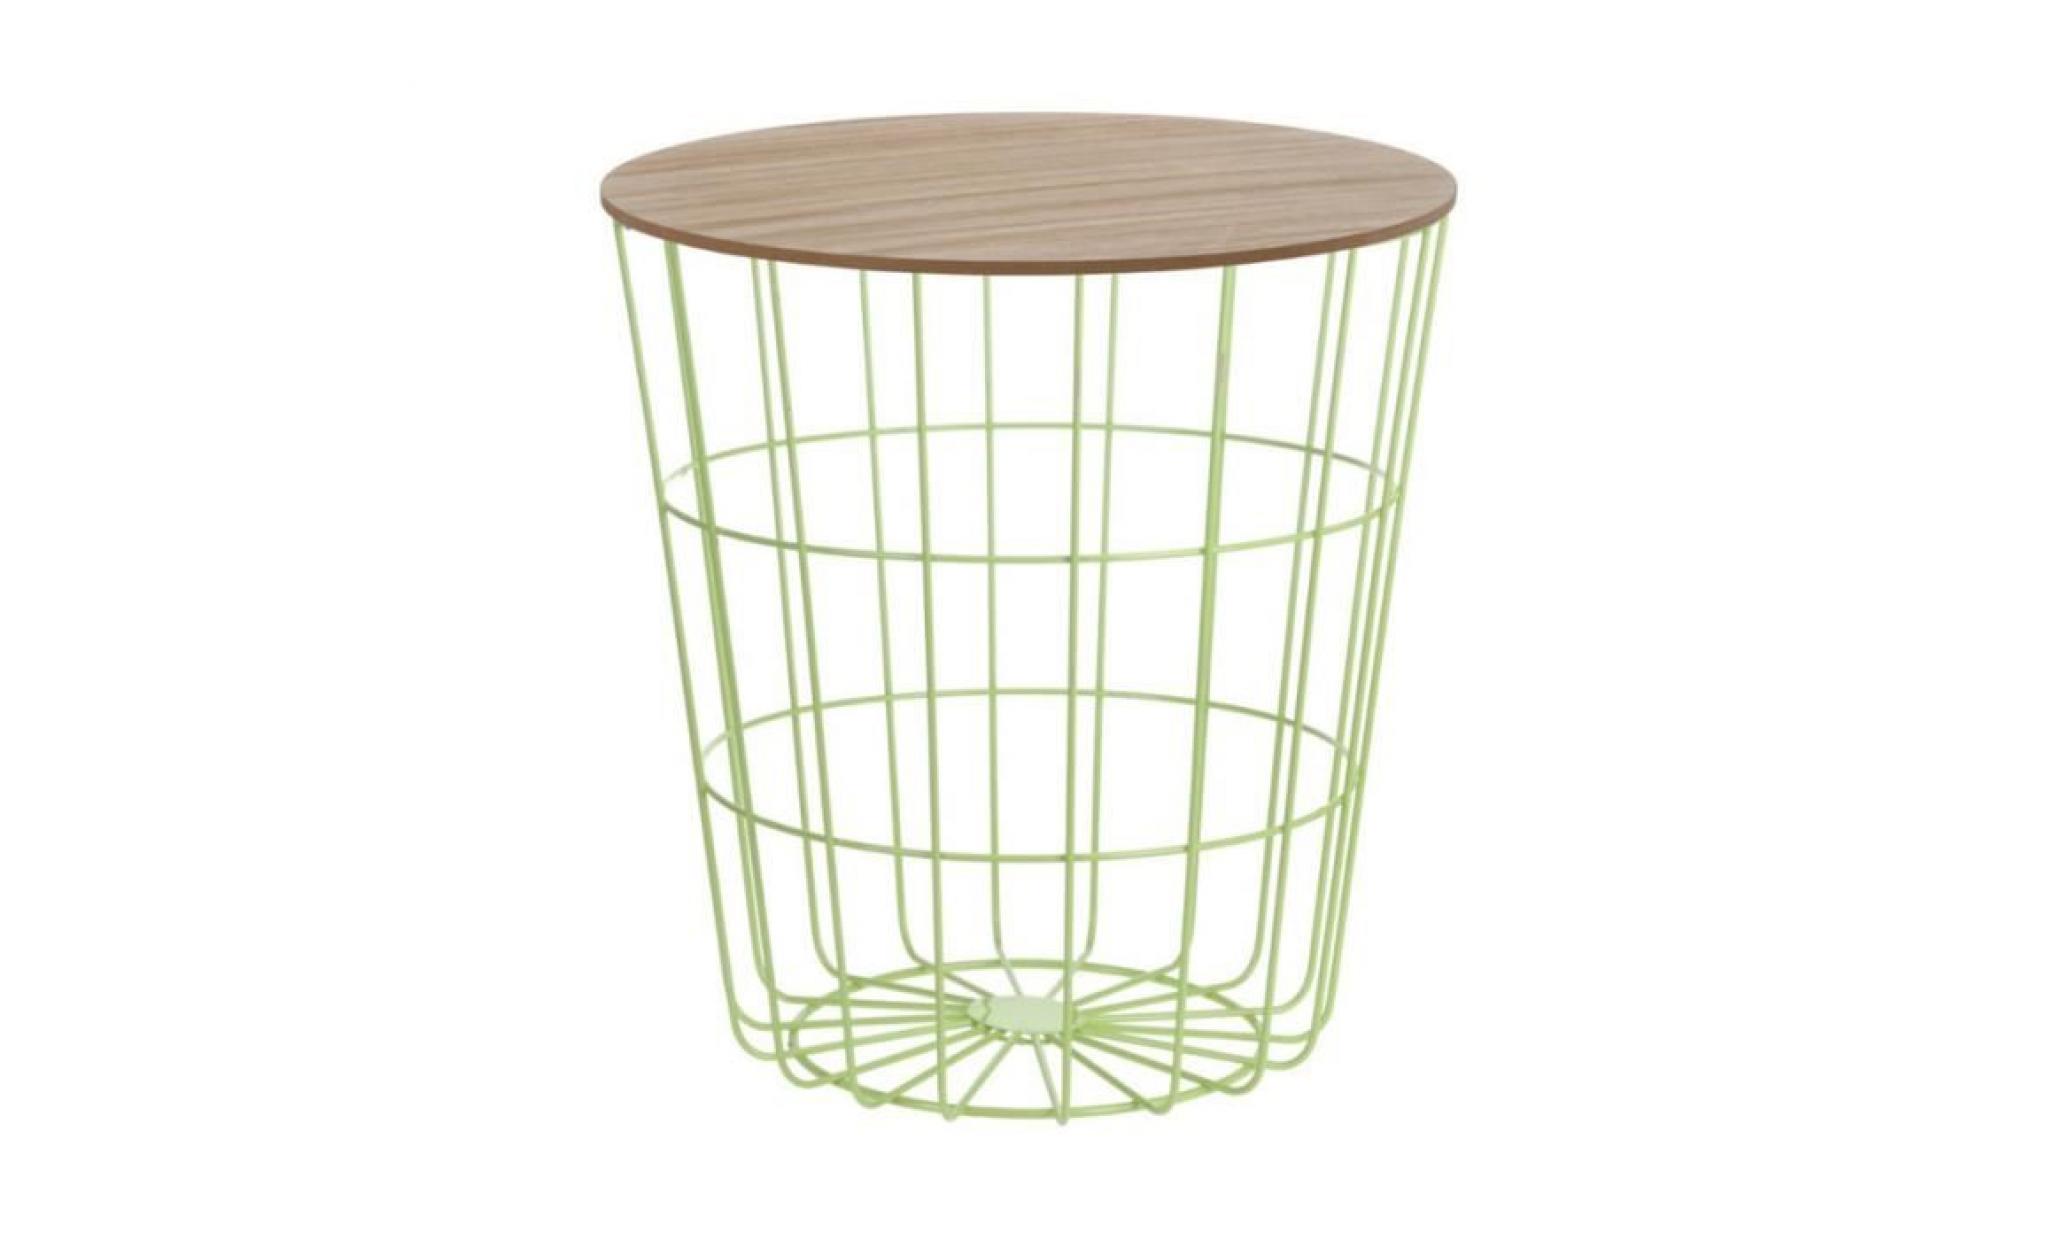 table basse / table d’appoint   suny   41 cm   vert   panier fonctionnel   style scandinave